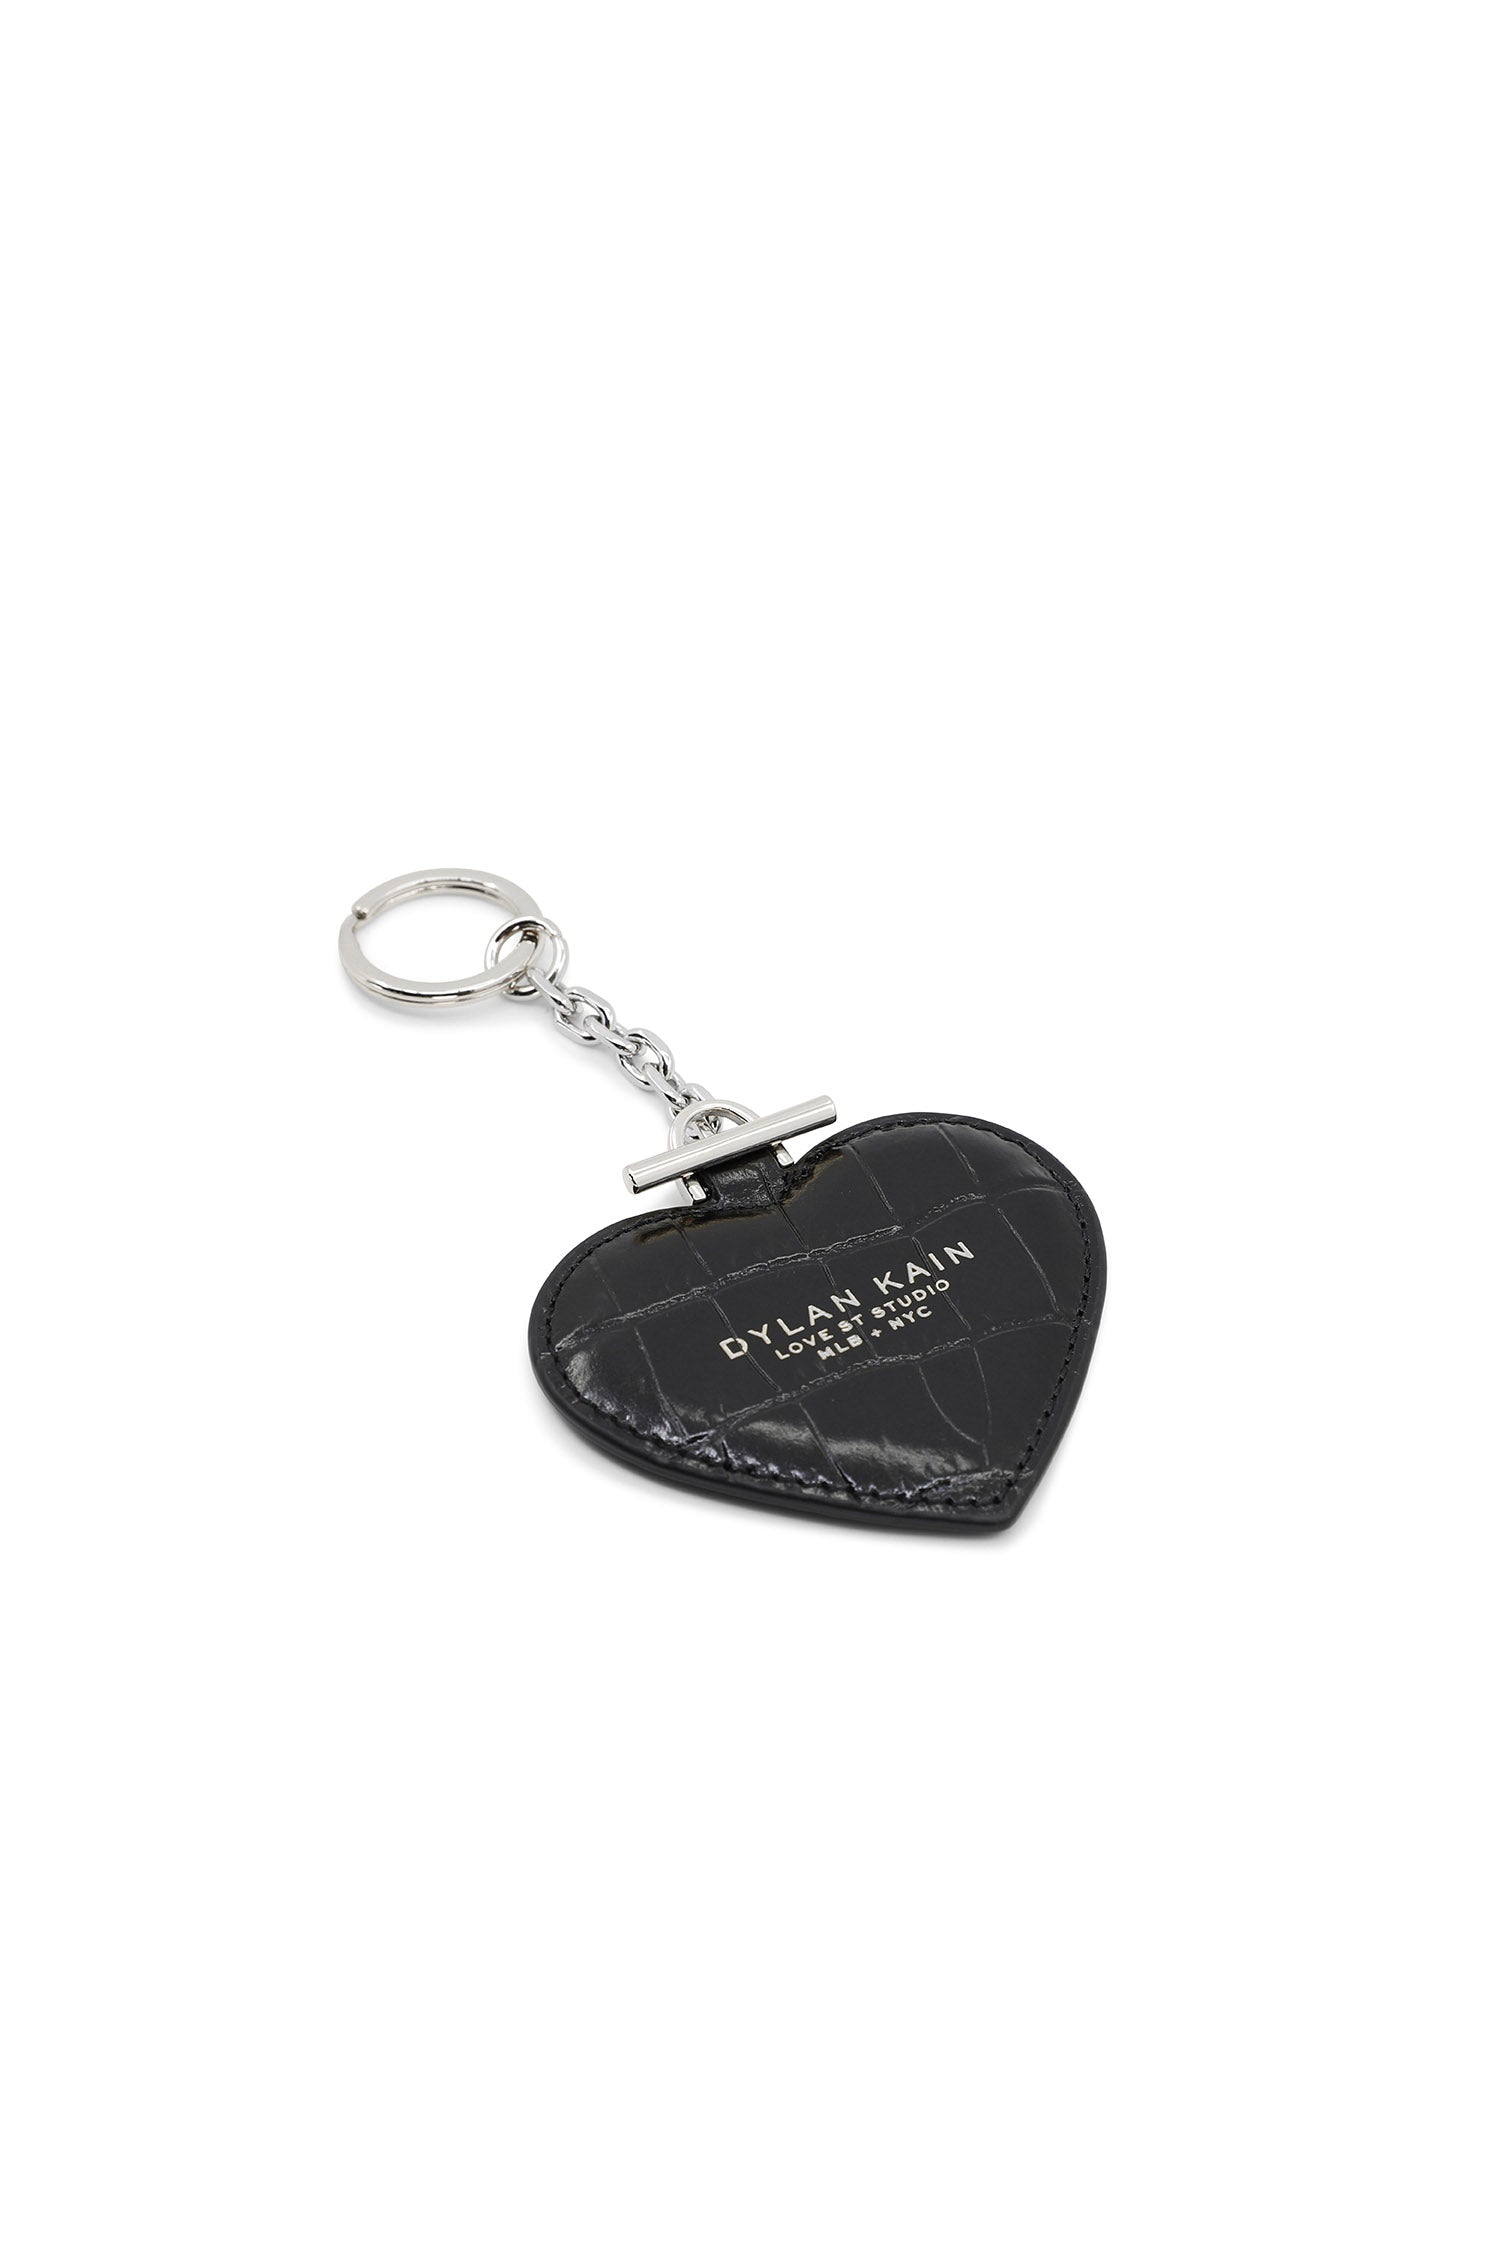 SAMPLE - Dylan Kain Heart Keychain Black silver